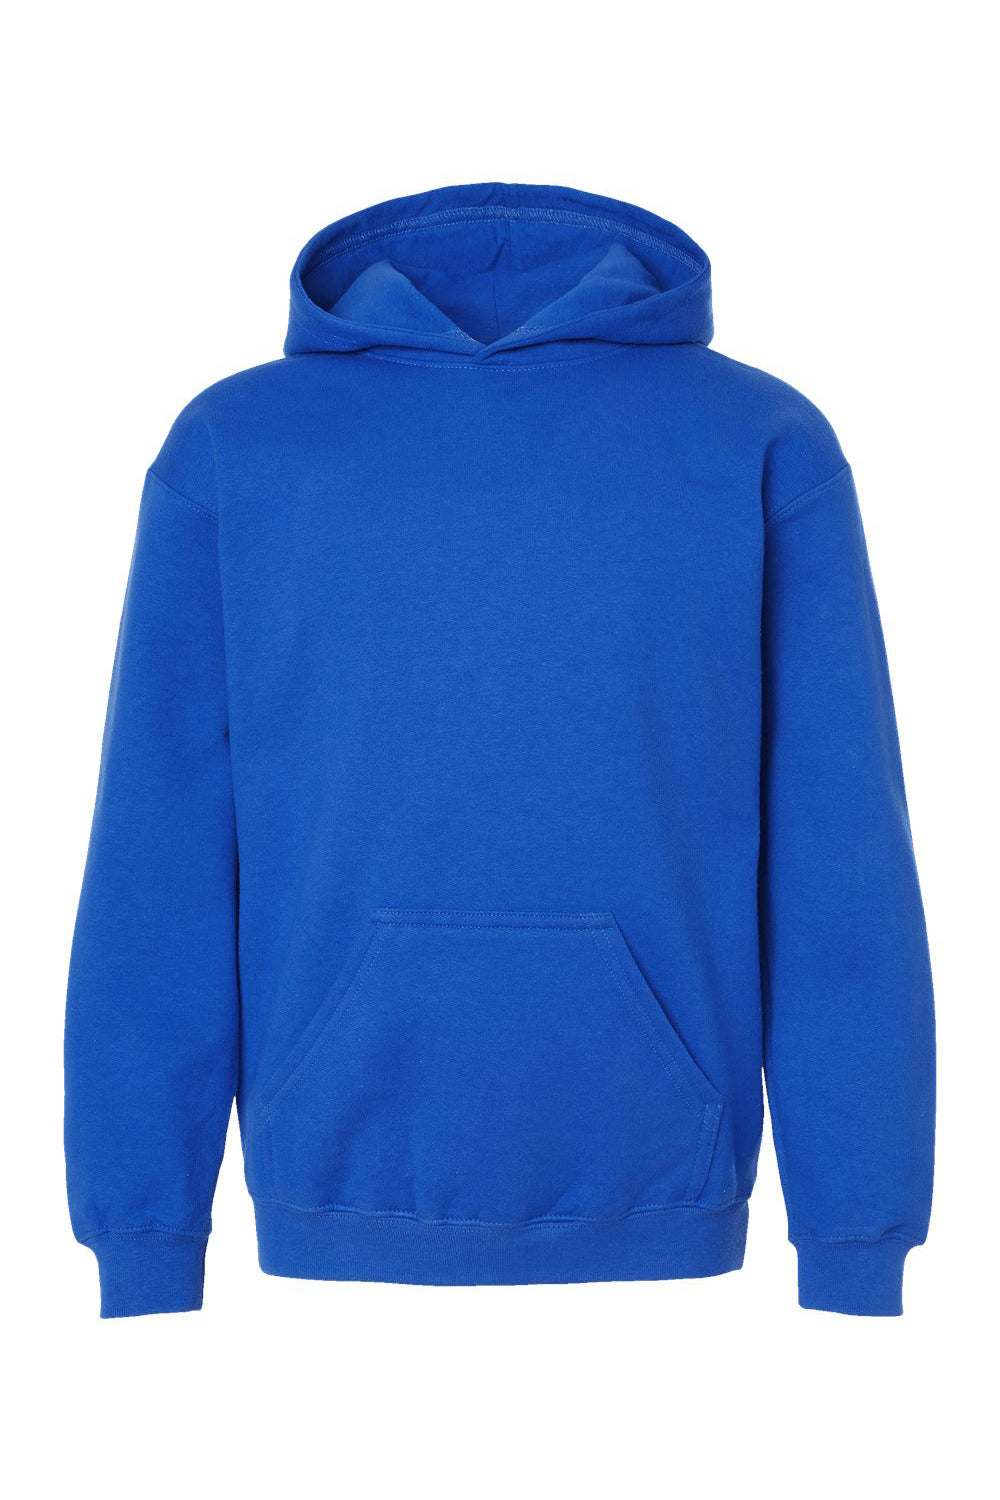 Tultex 320Y Youth Hooded Sweatshirt Hoodie Royal Blue Flat Front